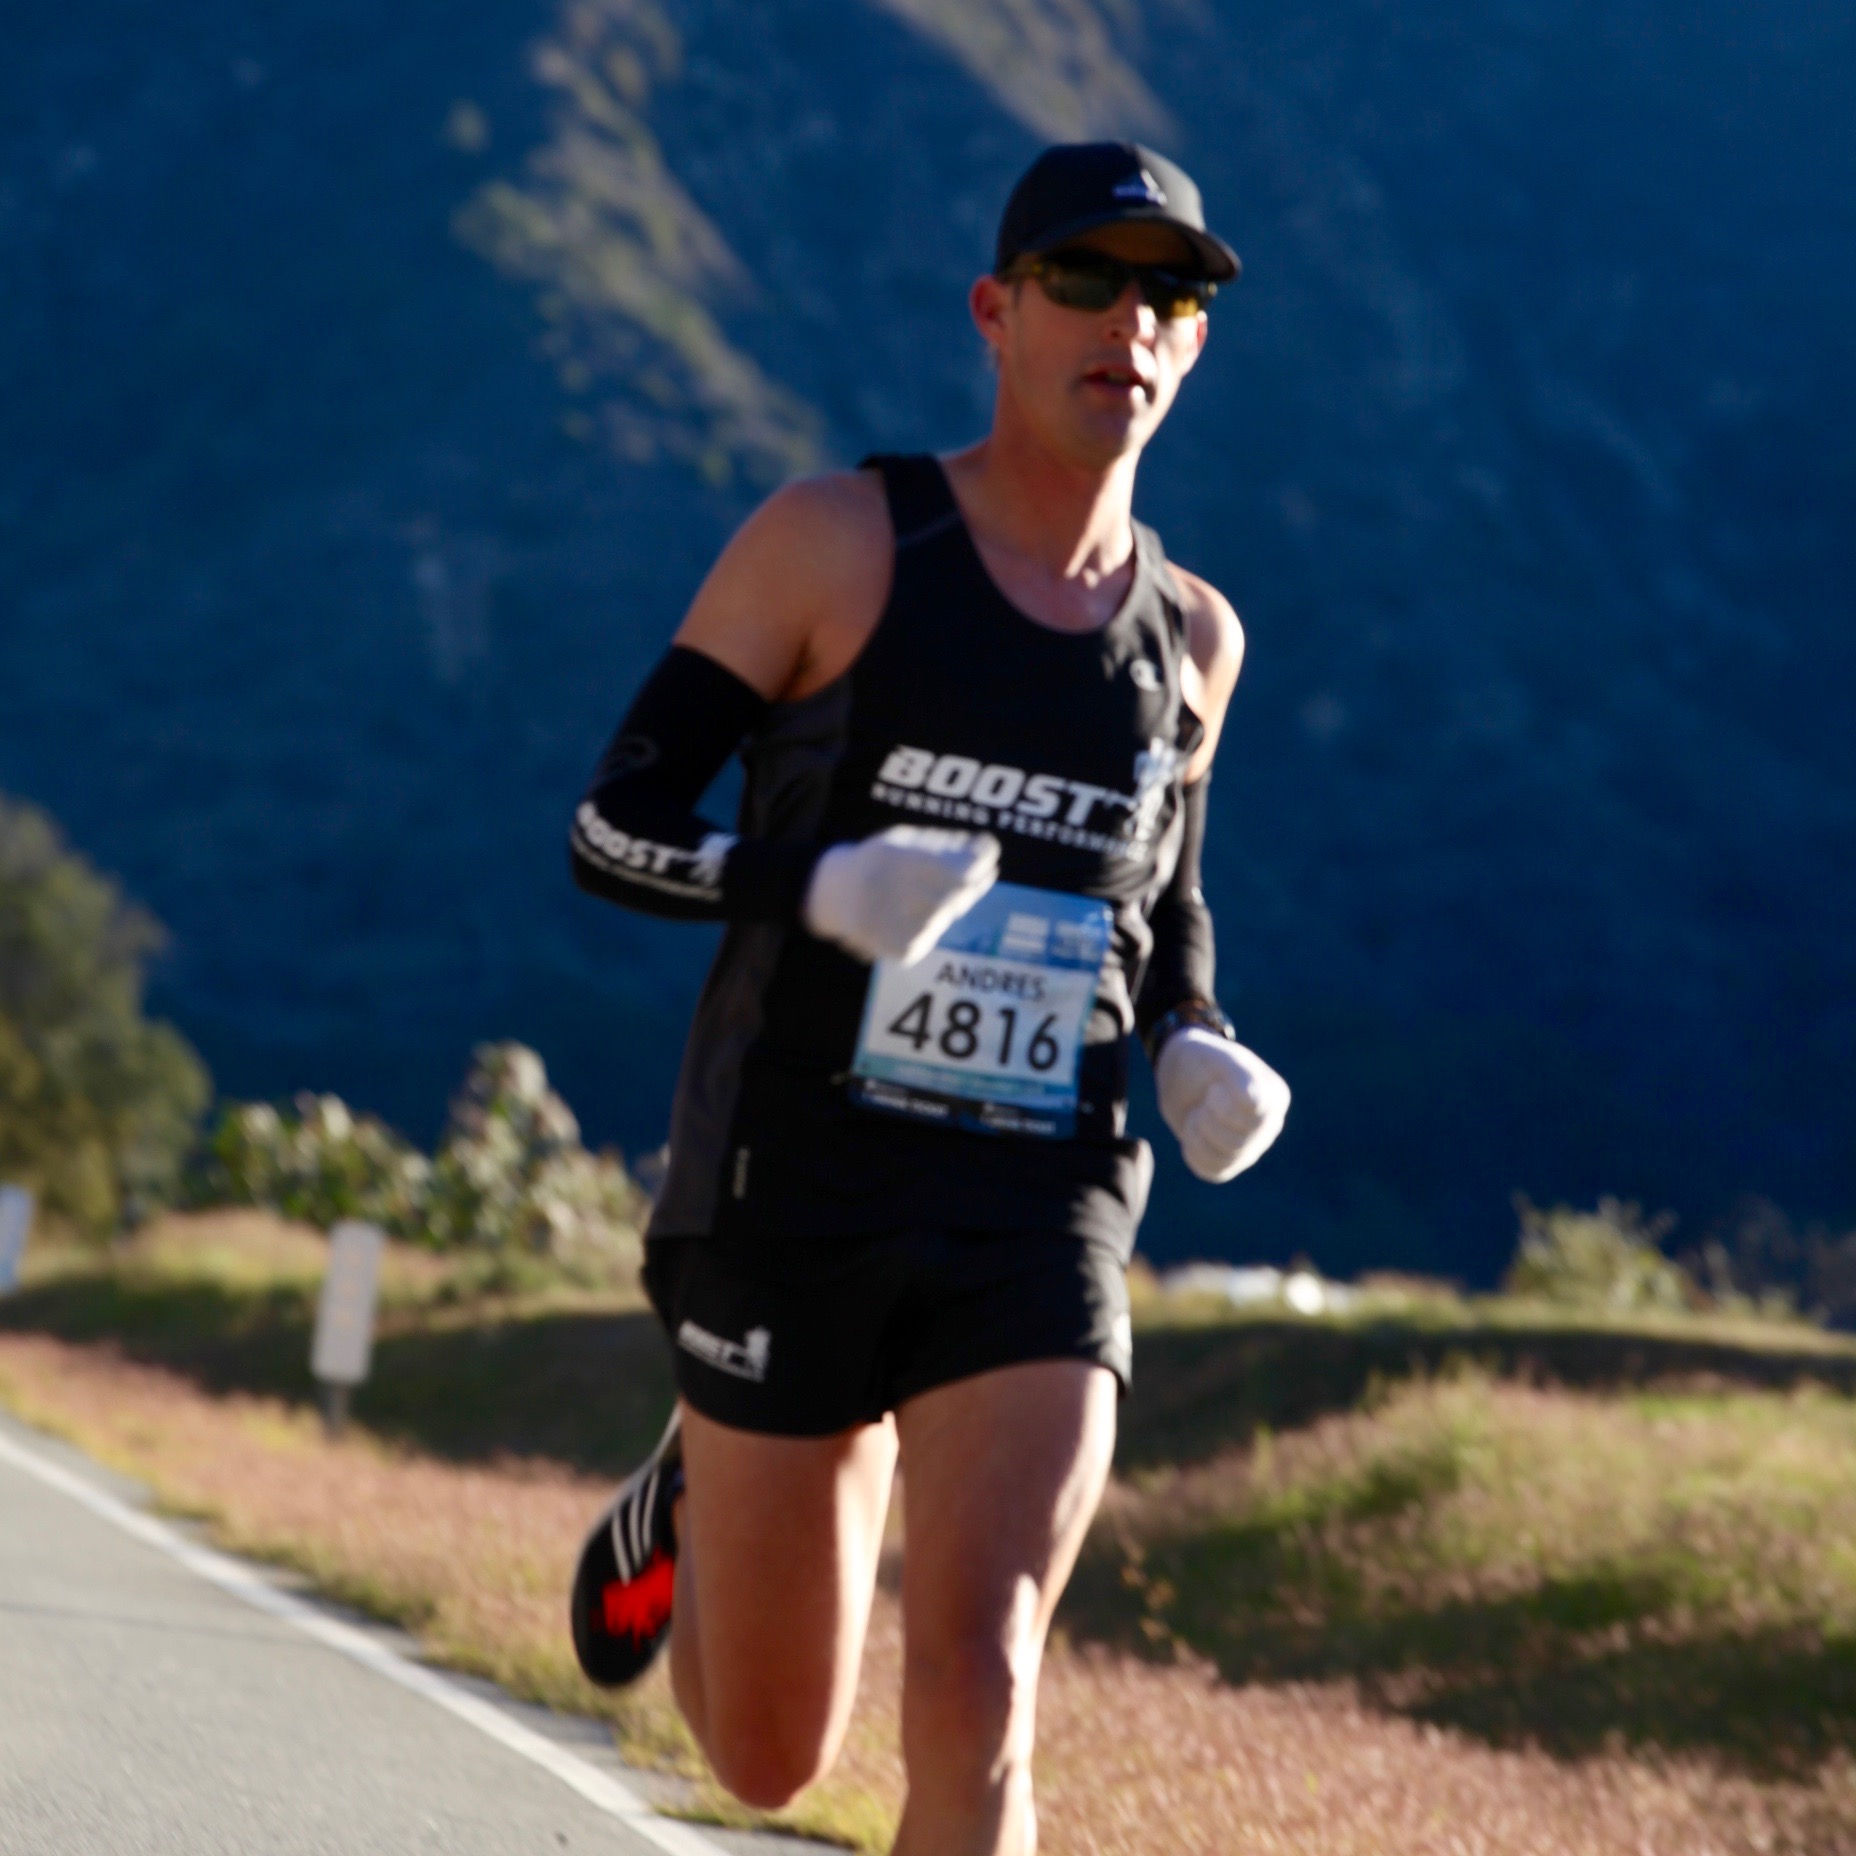 Andy racing at the Revel Canyon City half-marathon